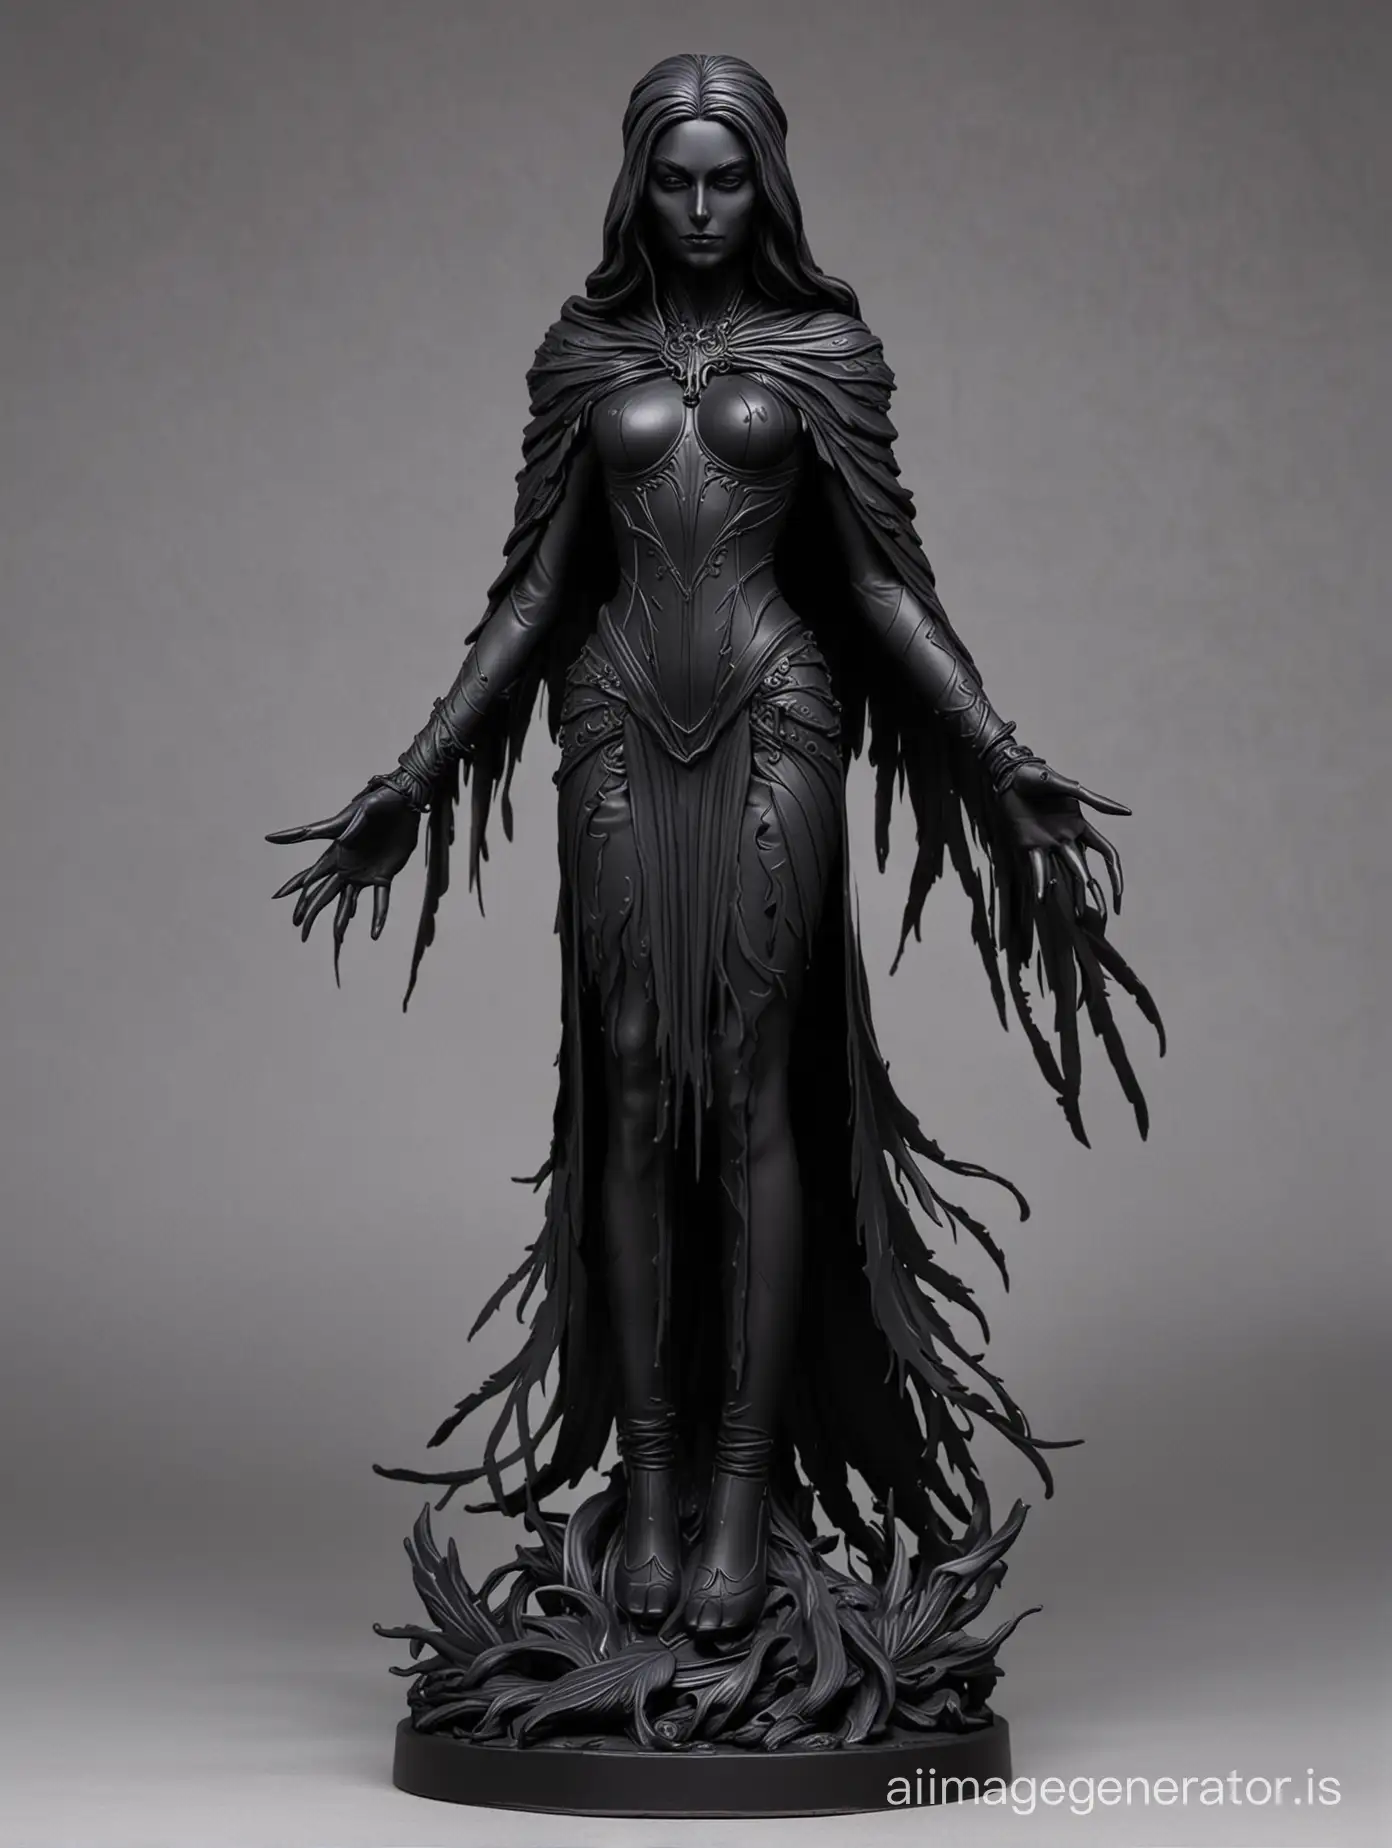 Mysterious-Raven-Queen-Shadow-Figure-Artwork